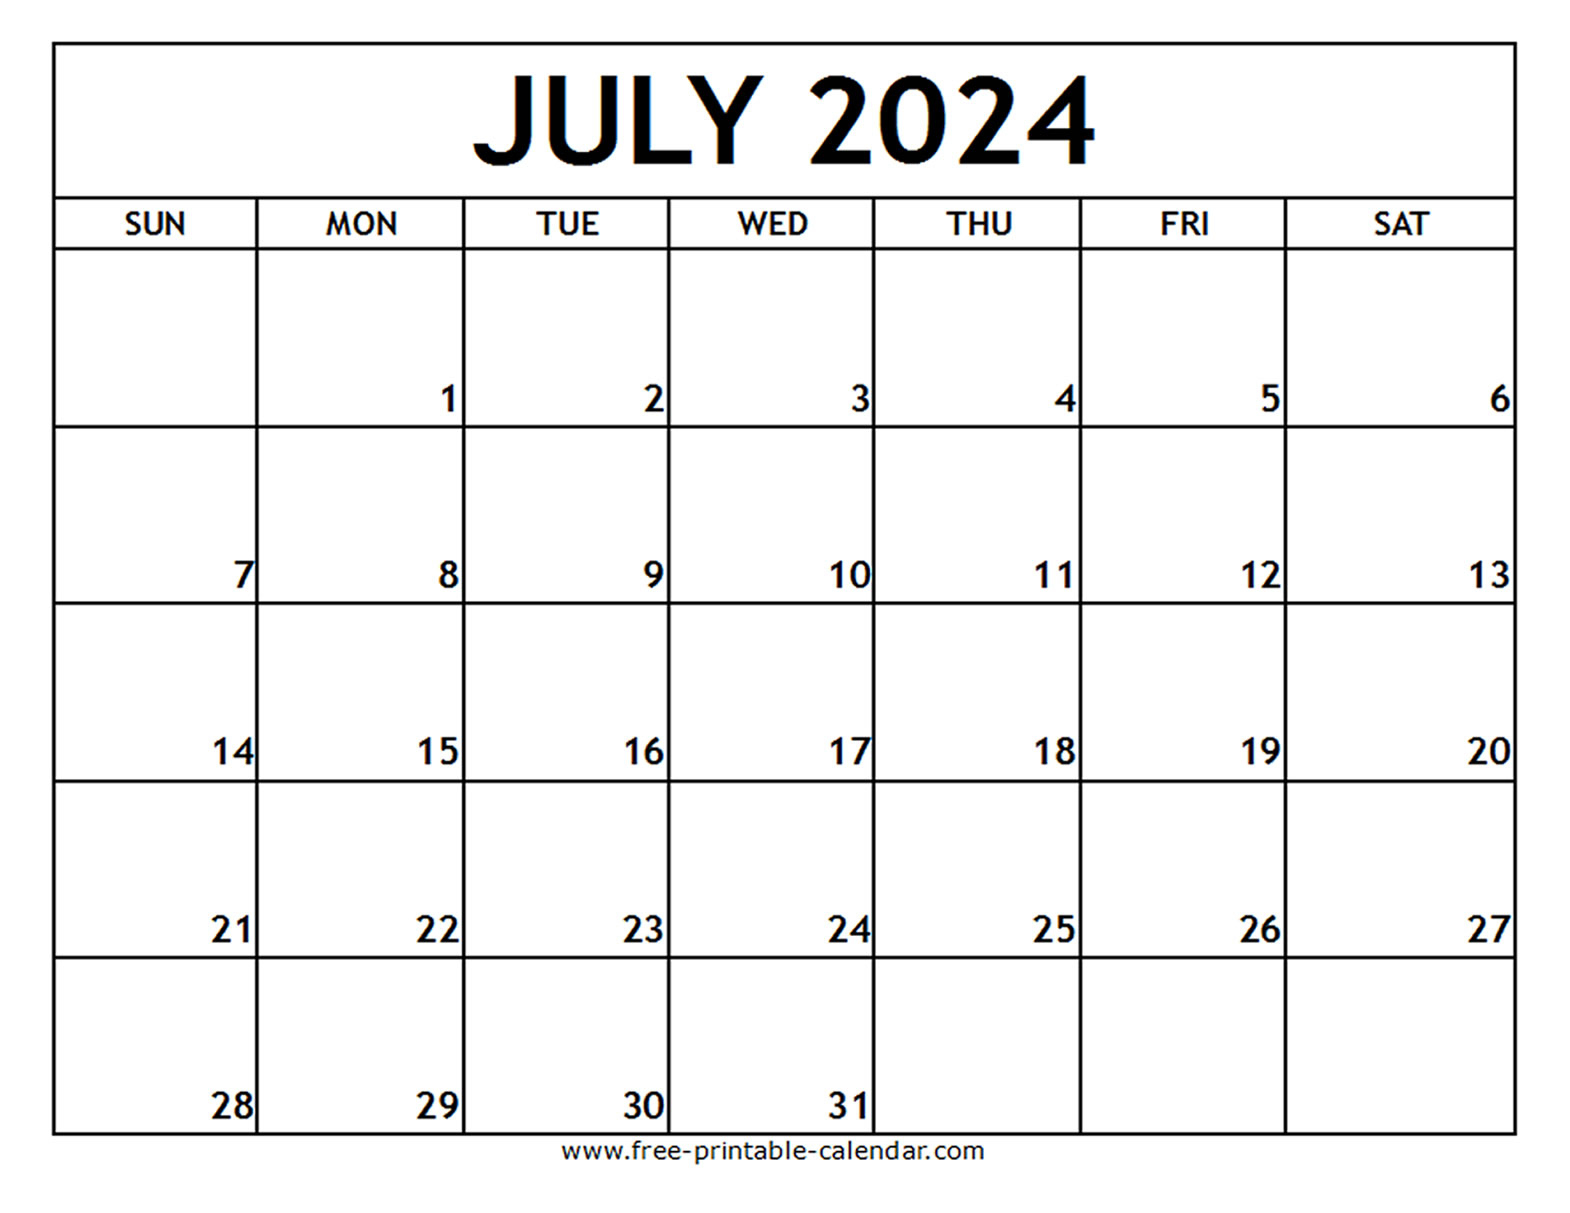 July 2024 Printable Calendar - Free-Printable-Calendar | 17 July 2024 Calendar Printable